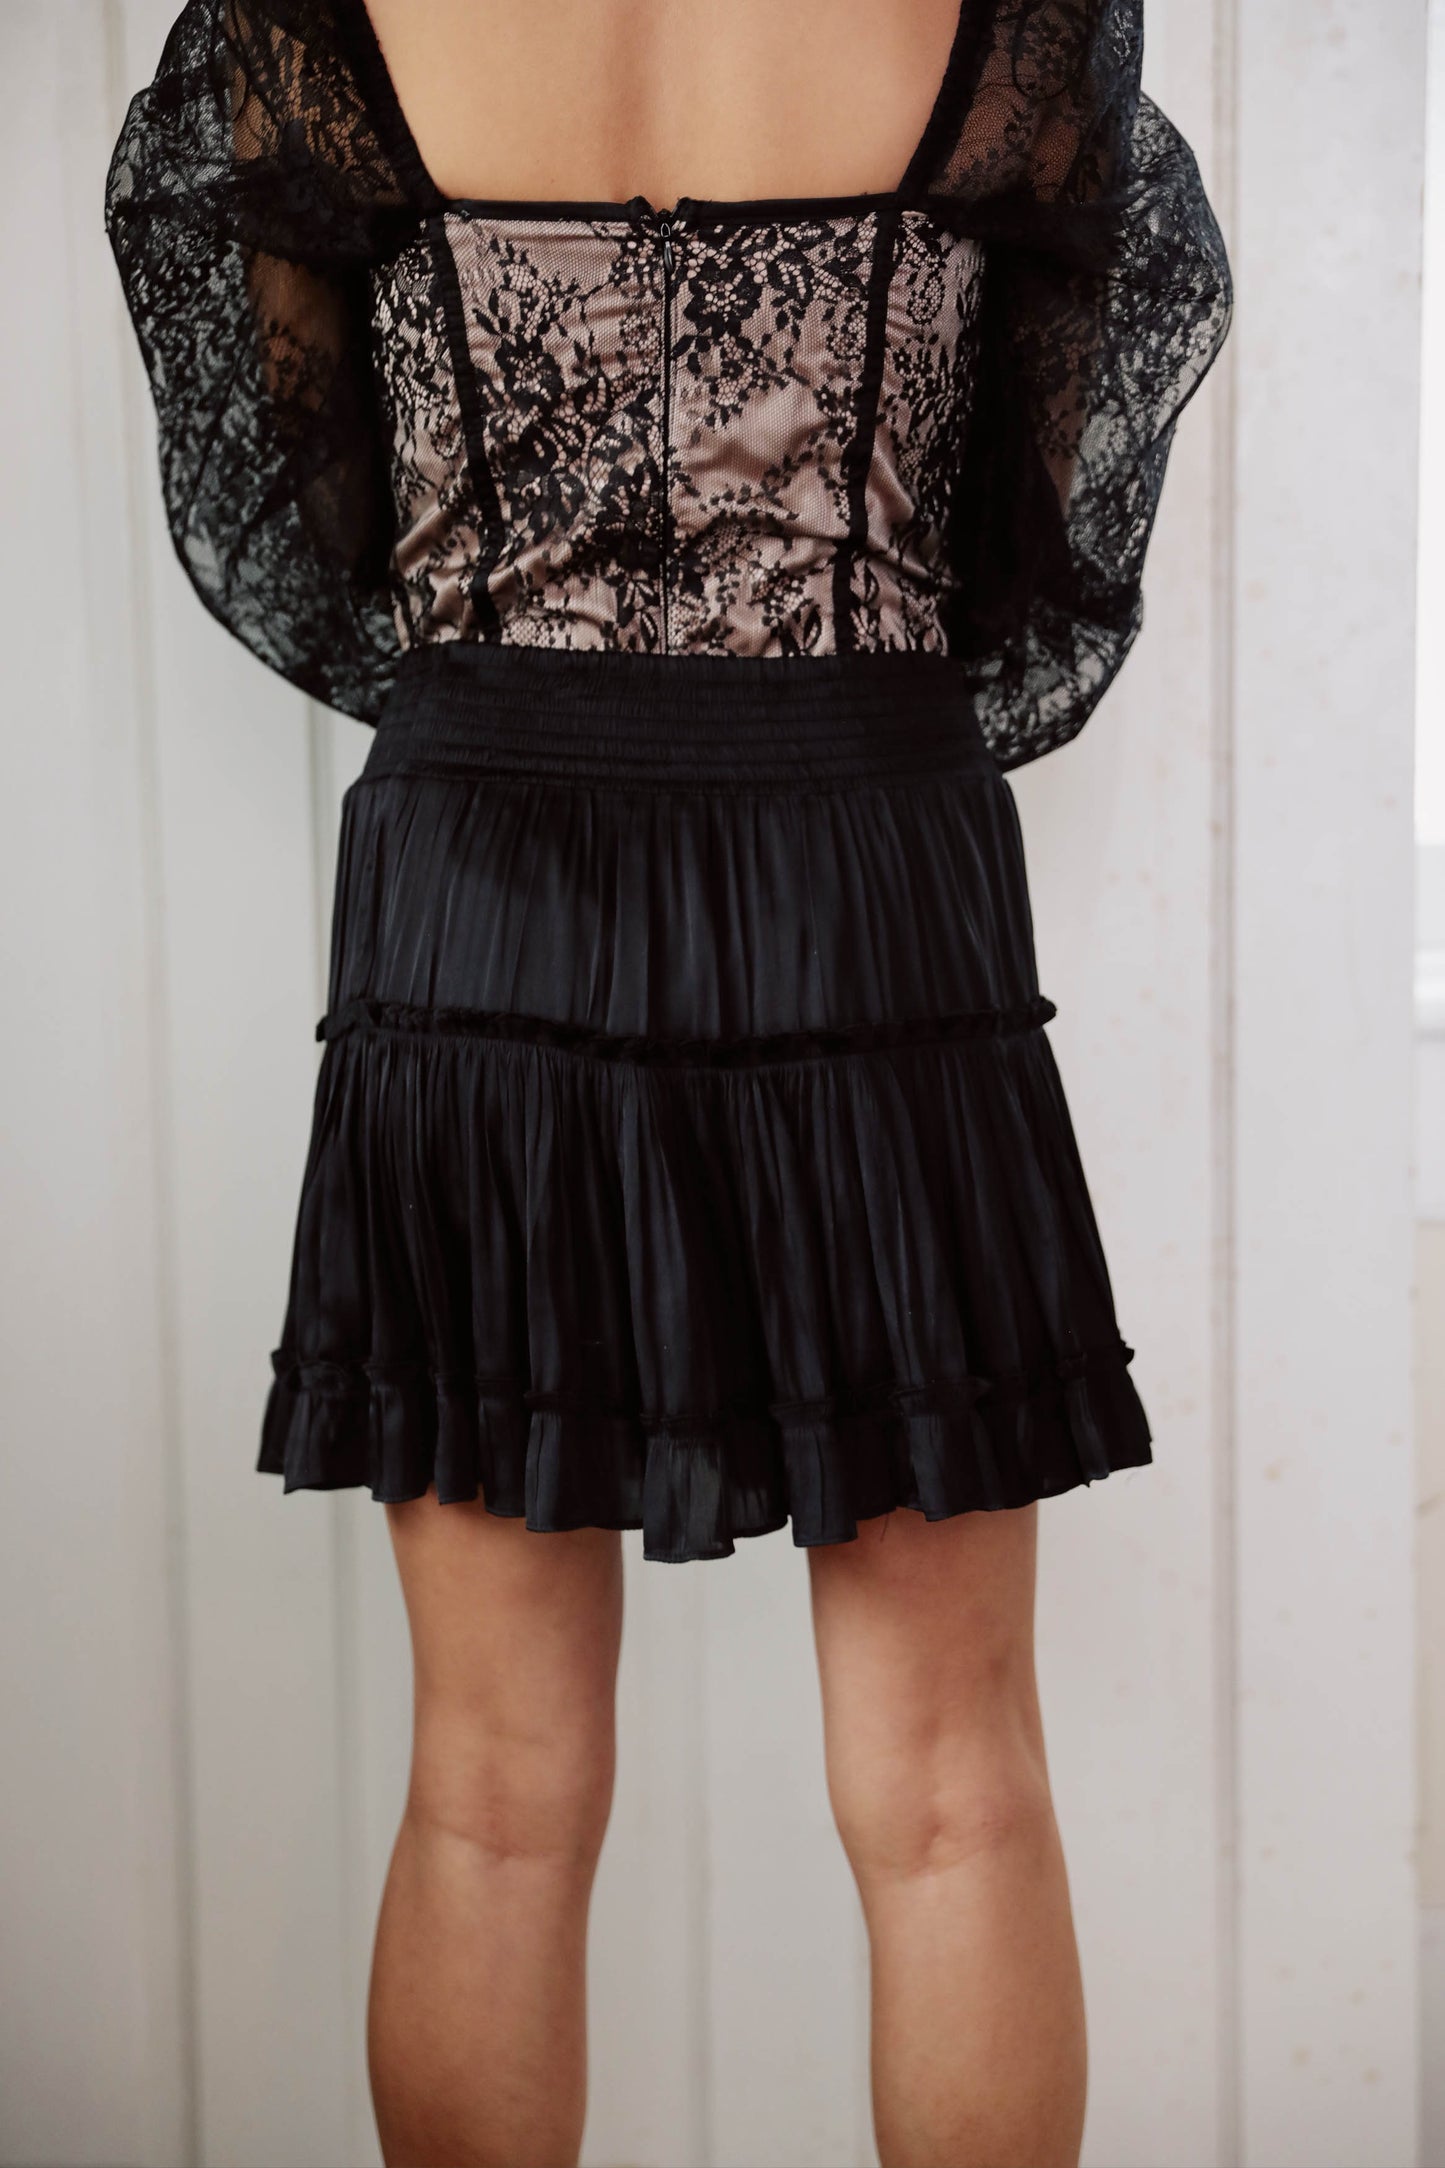 Oui-Oui Skirt in Black